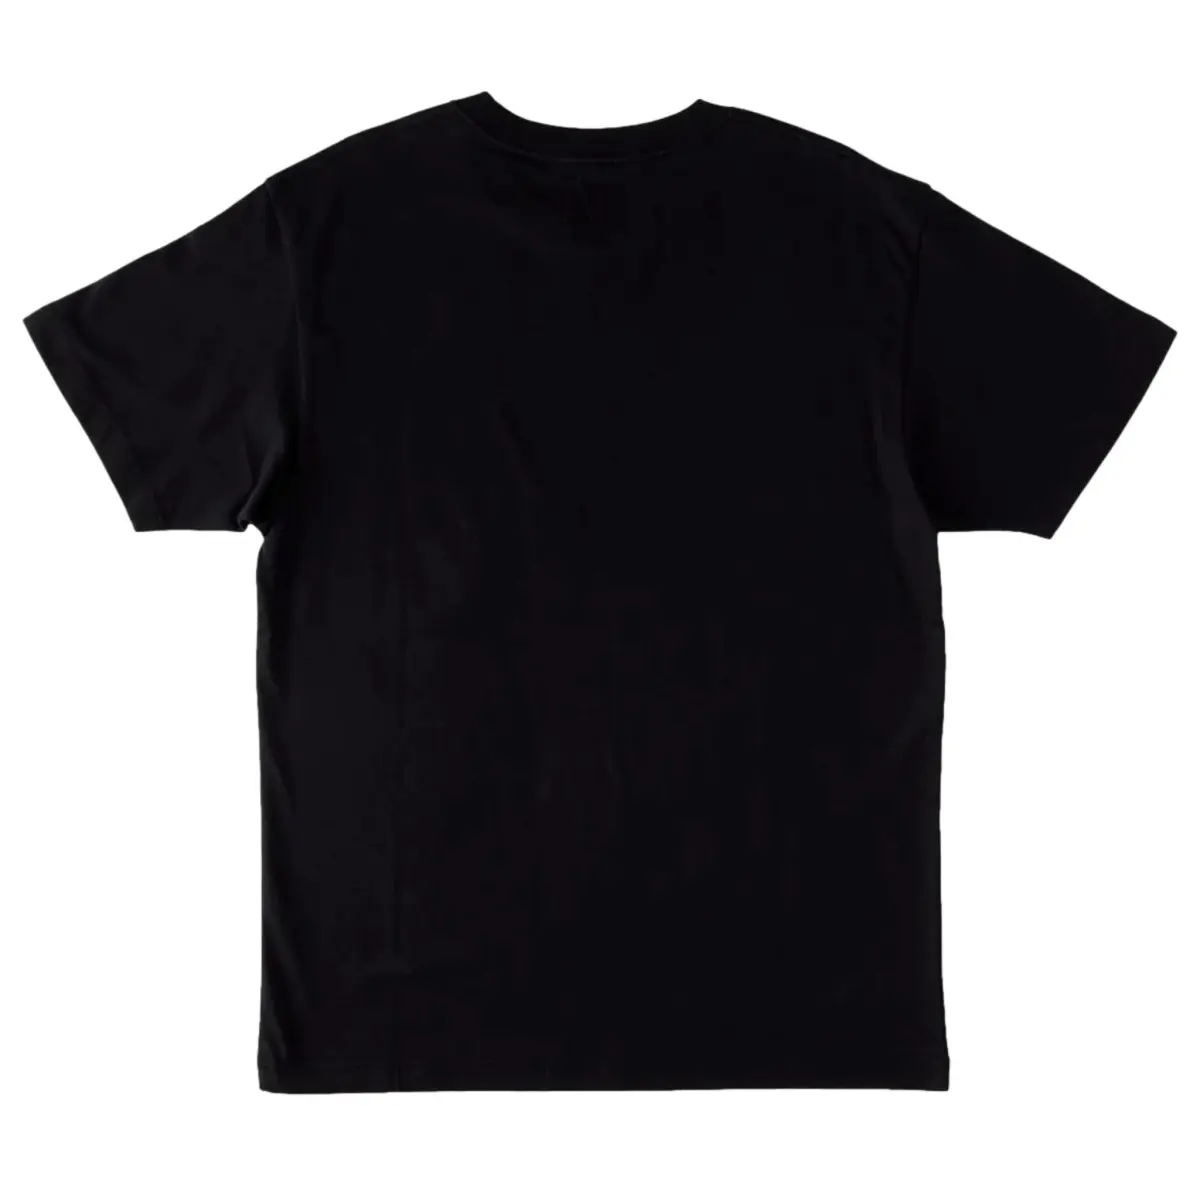 Dc Shoes Square Black Star Fill T-shirt